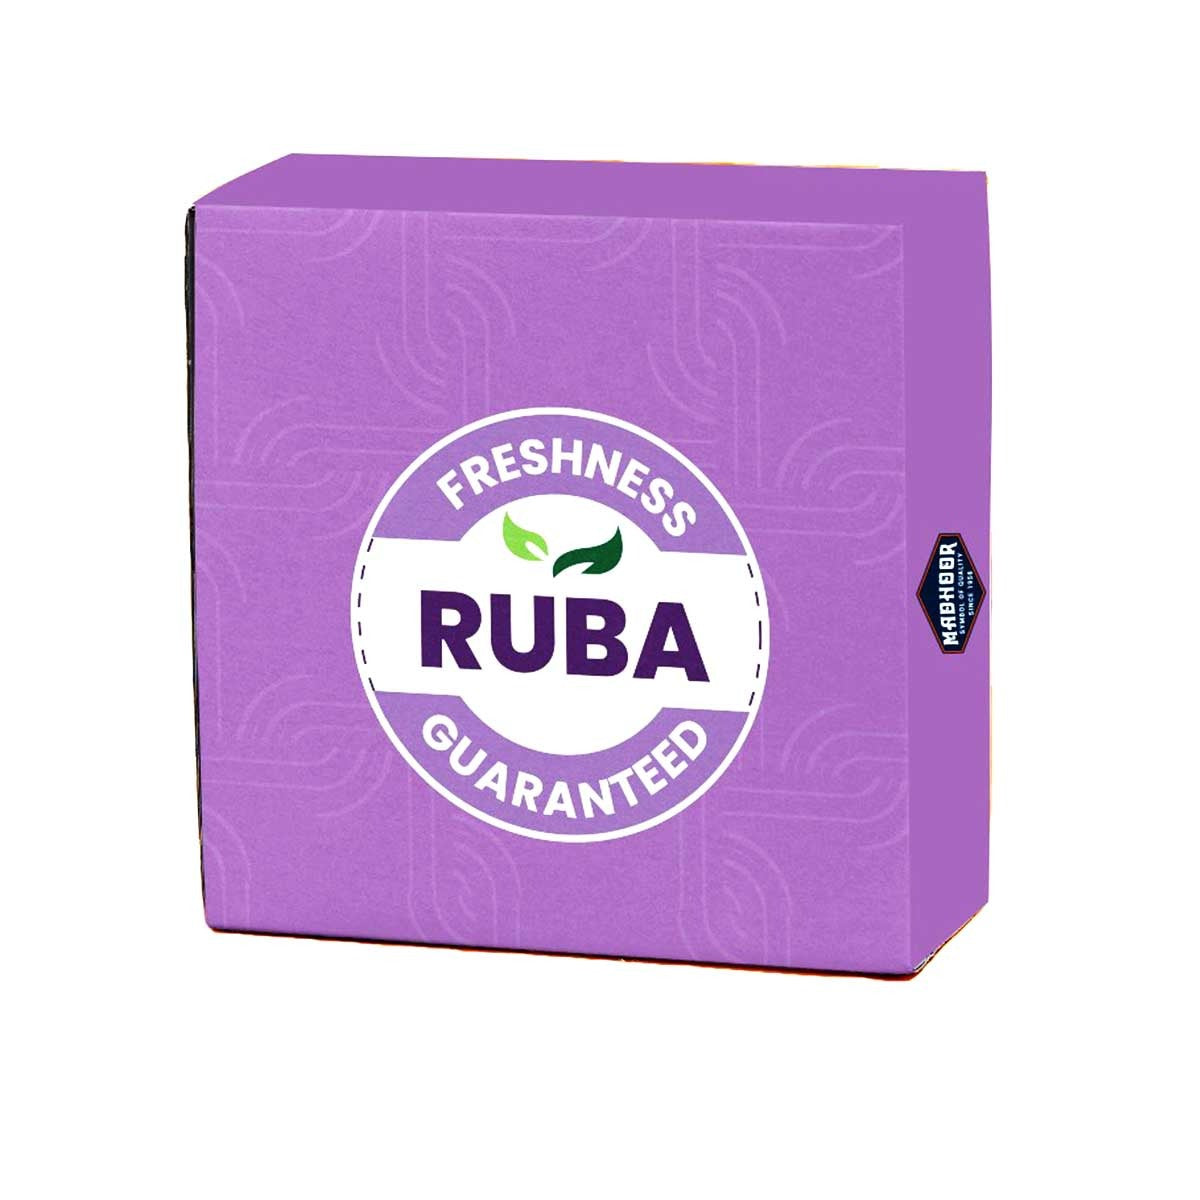 RUBA Alphonso Mangoes From Ratnagiri - 6 pcs Box with Premium XL Jumbo Size